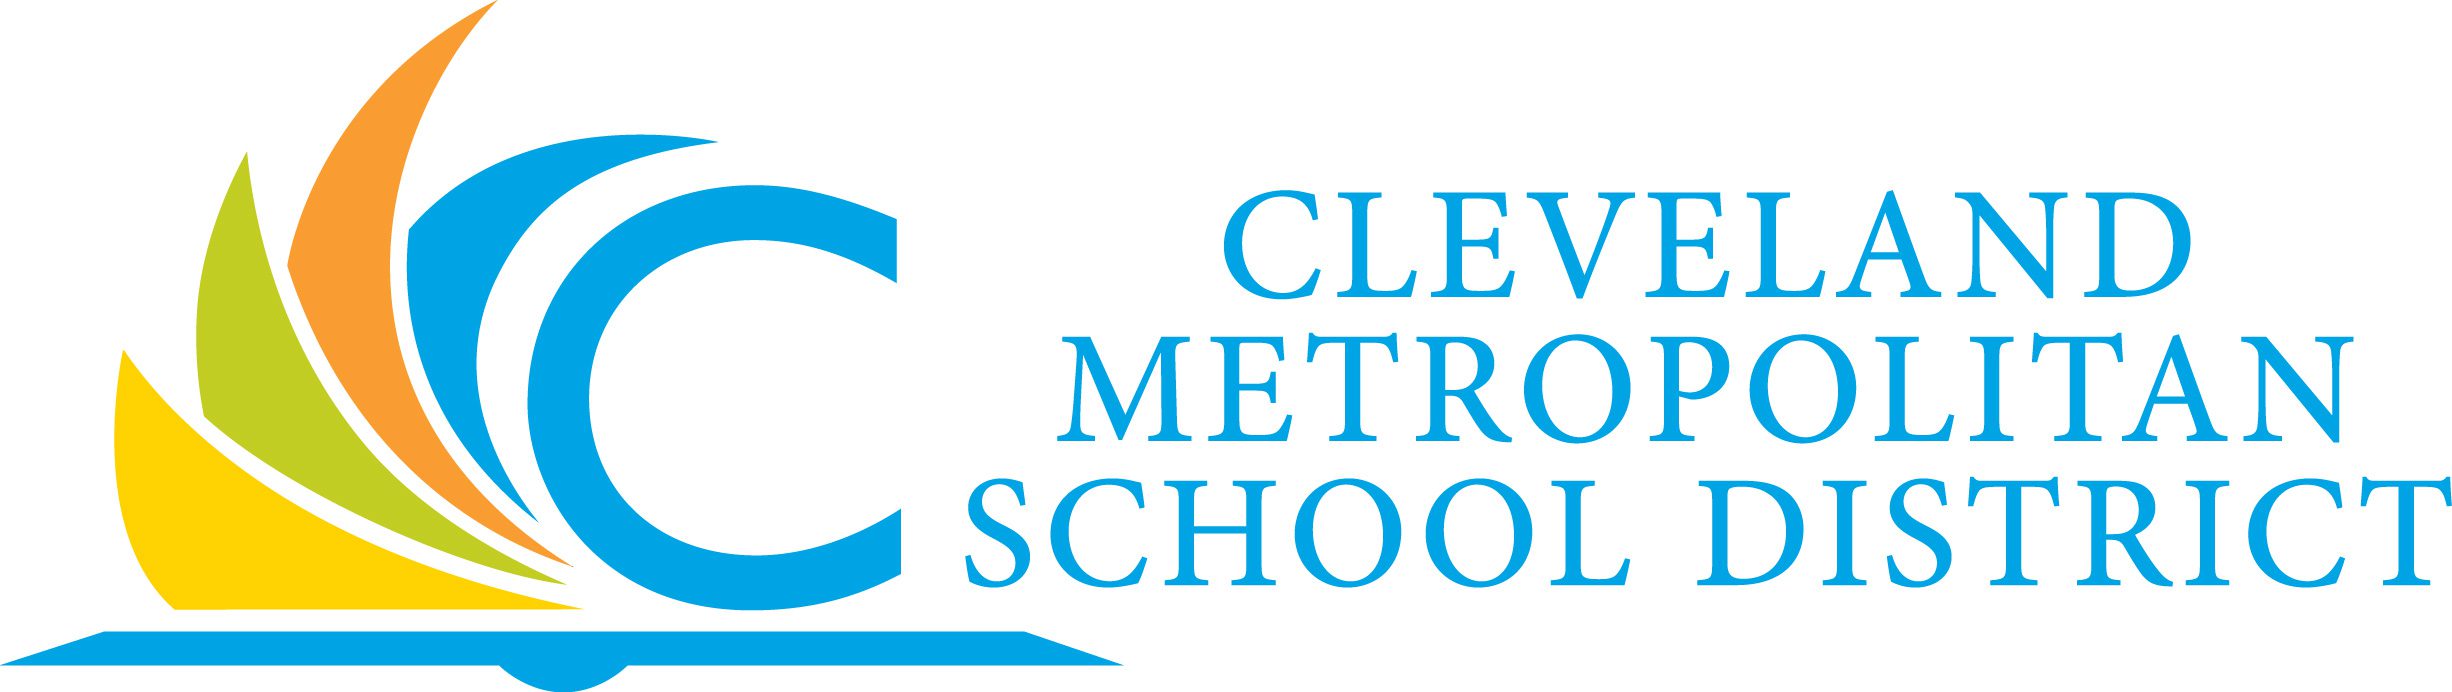 Cleveland Metro School District logo